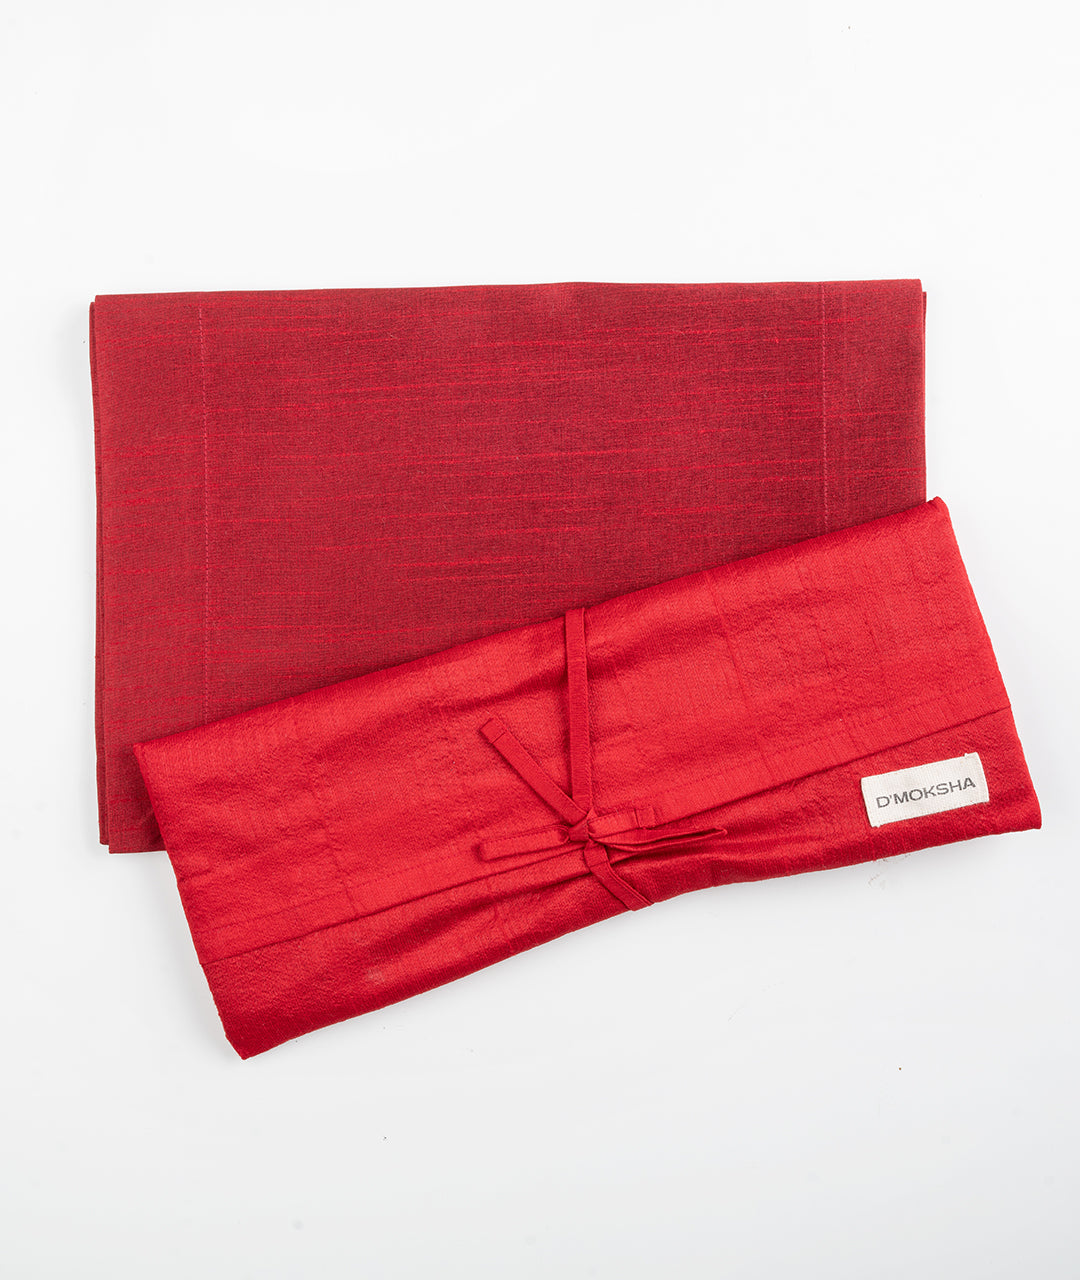 Red Silk Textured Placemats 14 x 19 Inch Set of 4 - Mitered Corner